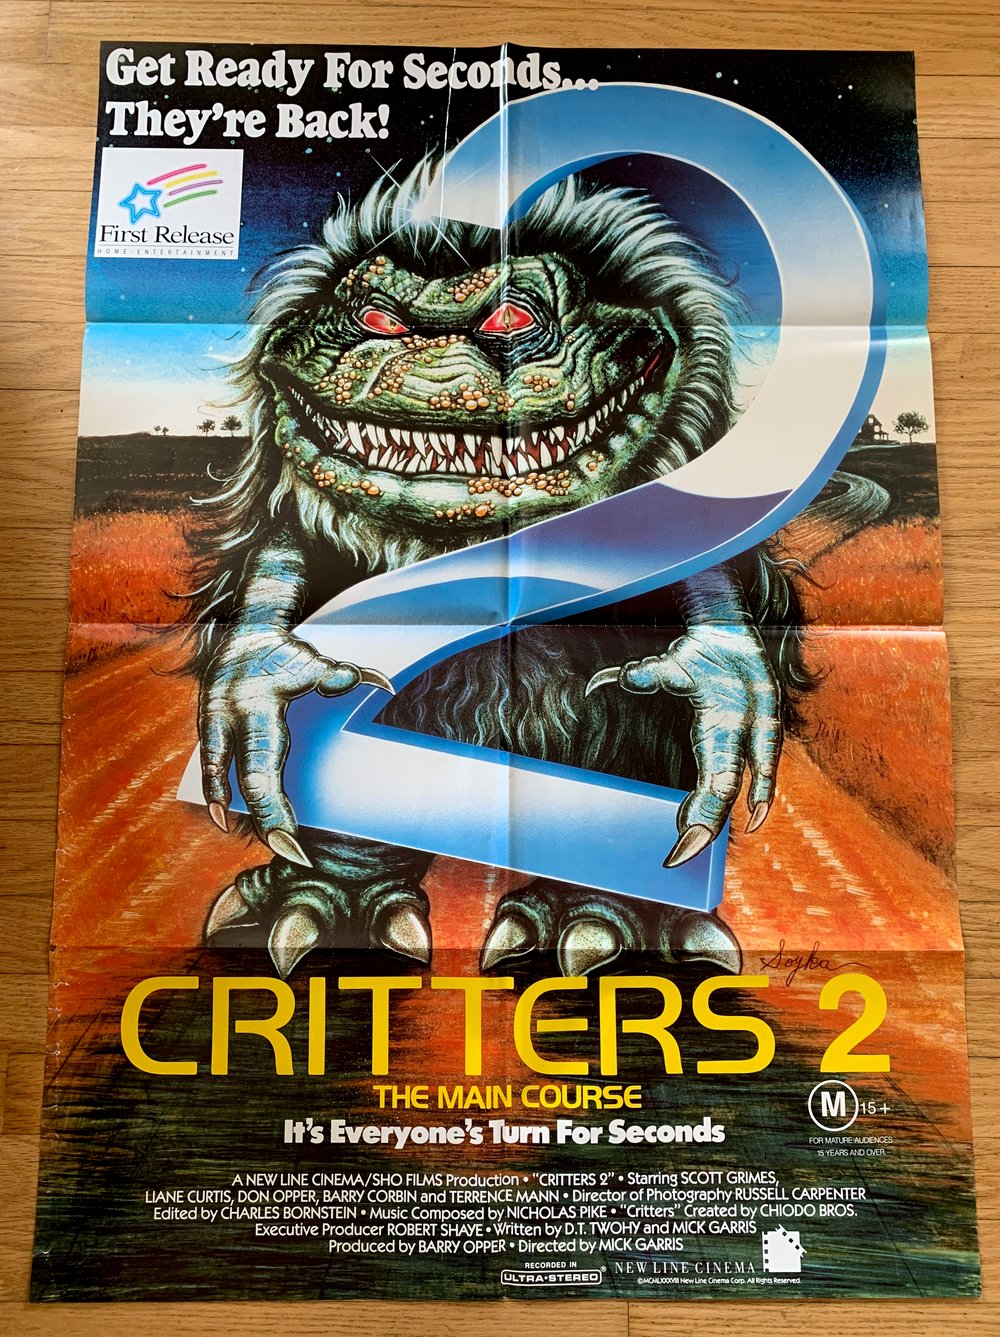 1989 CRITTERS 2 Original Australian One sheet Movie Poster